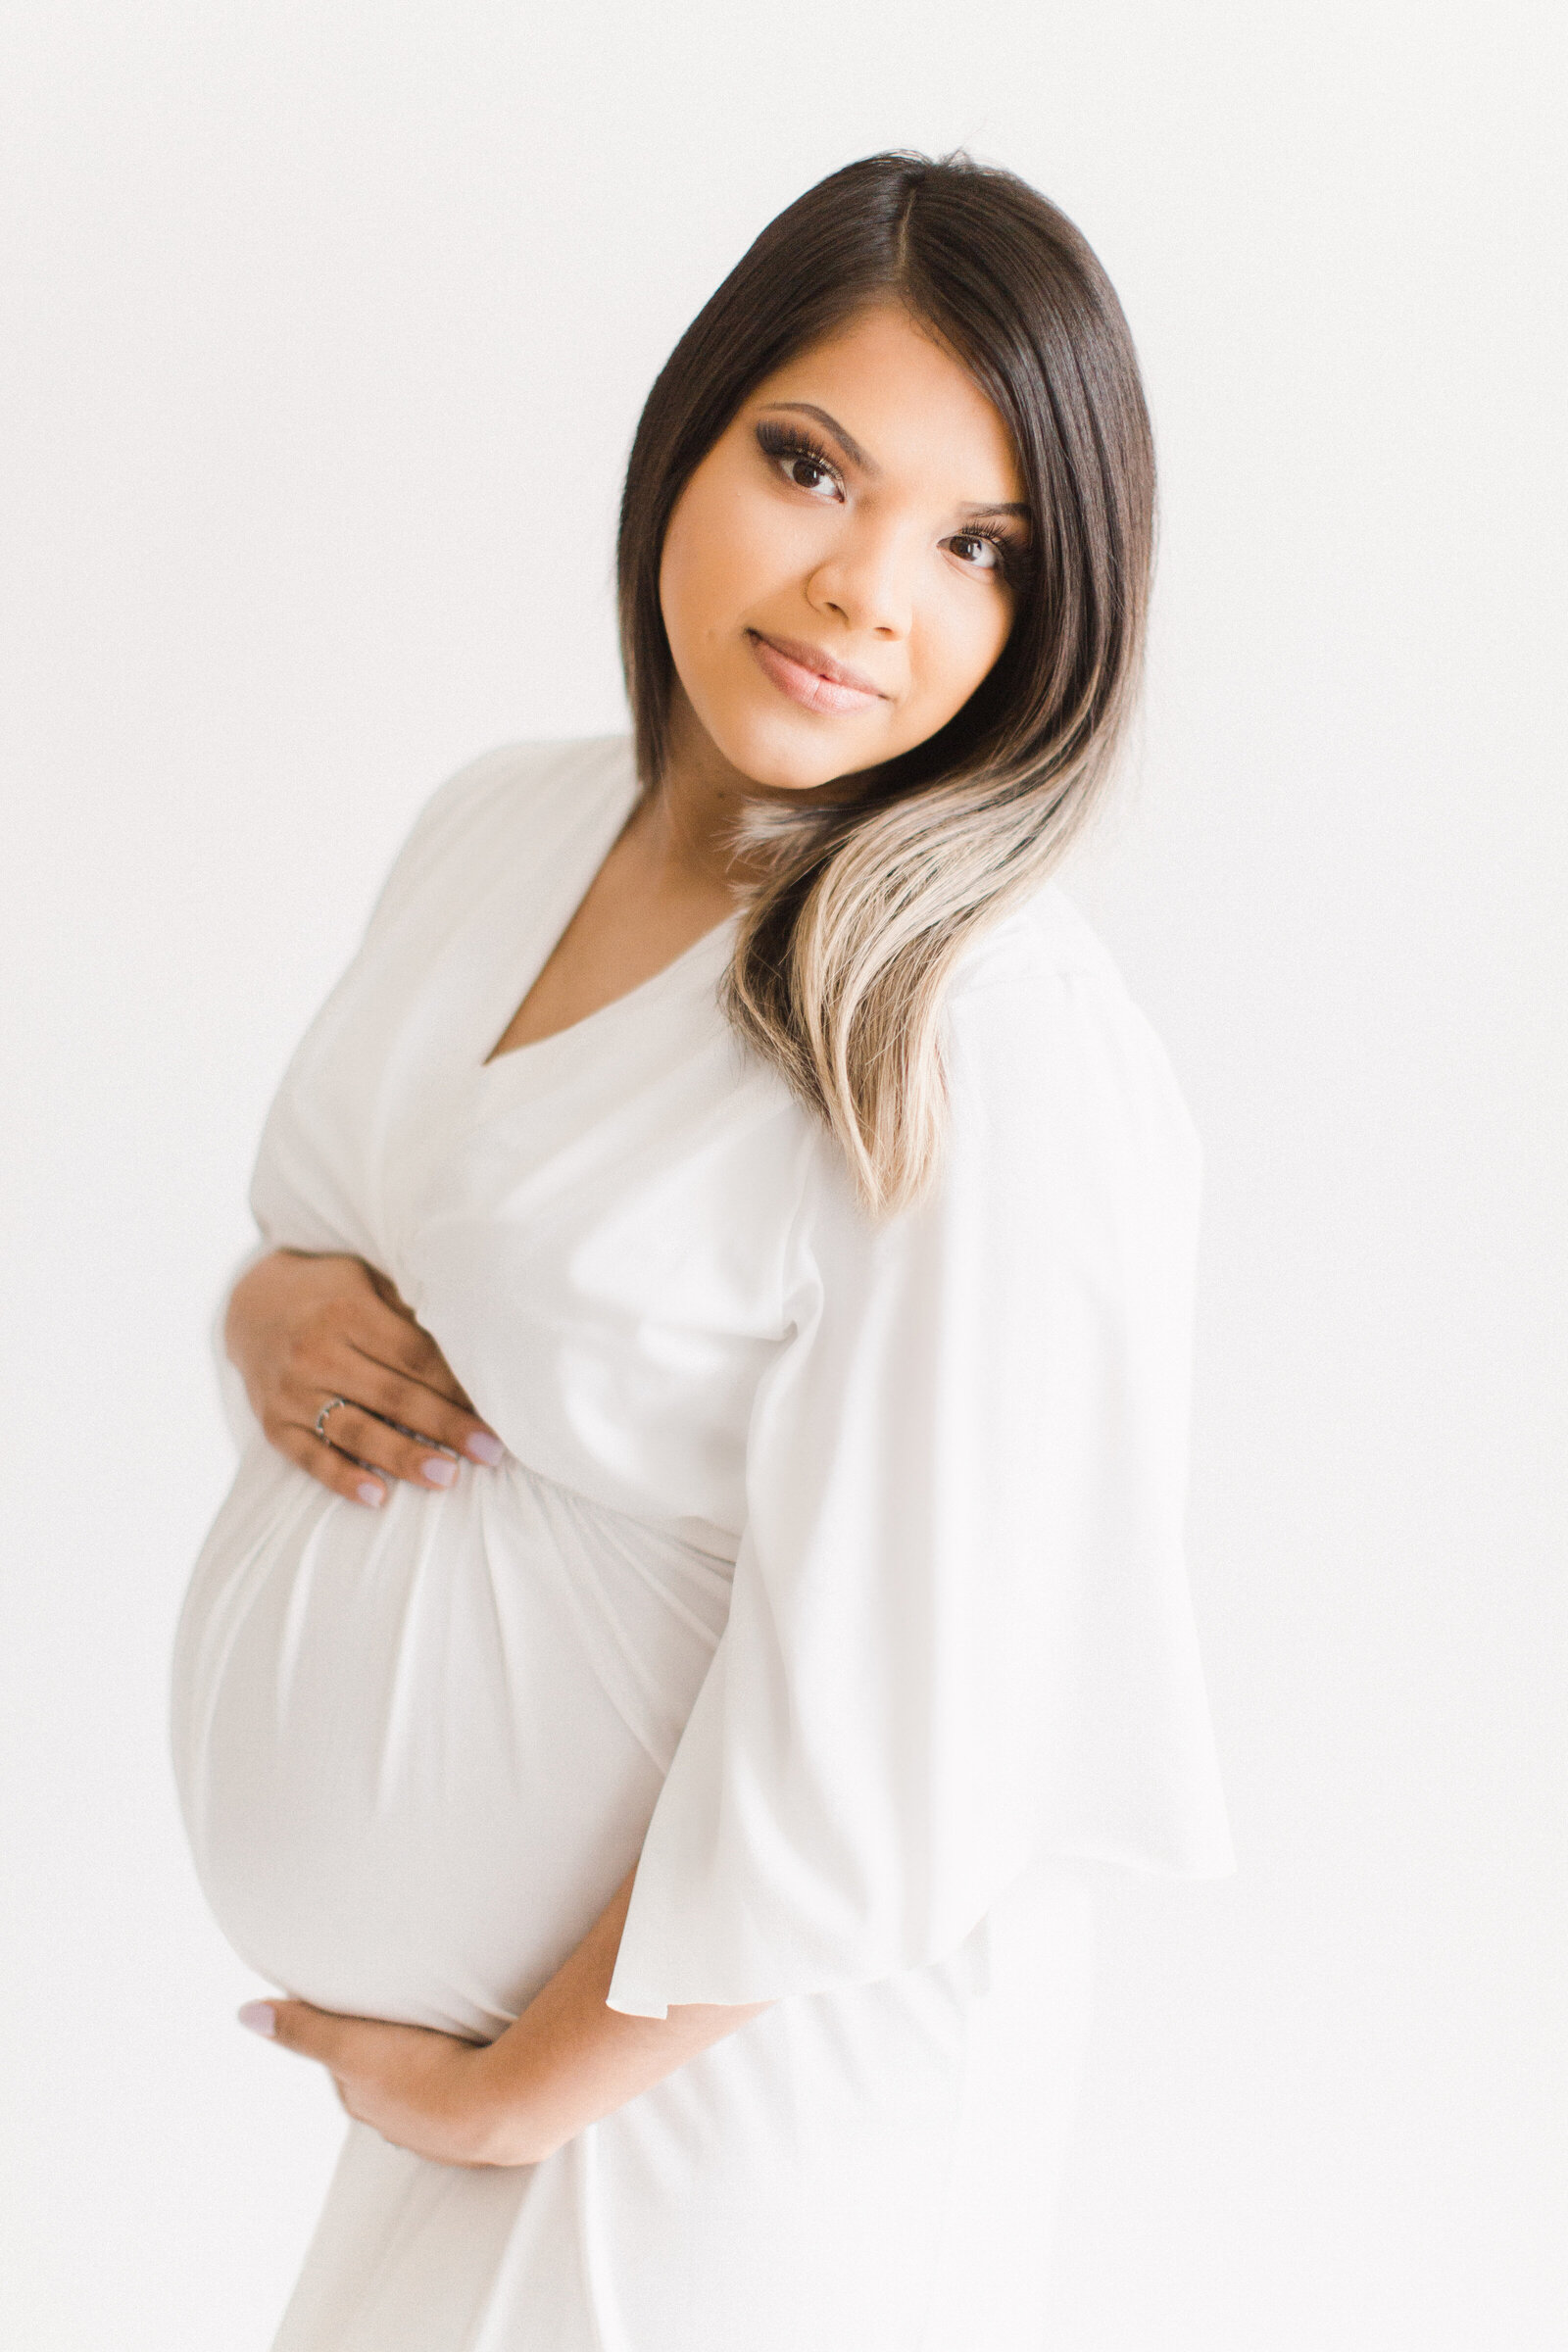 Mom in white dress on white background studio maternity photo.